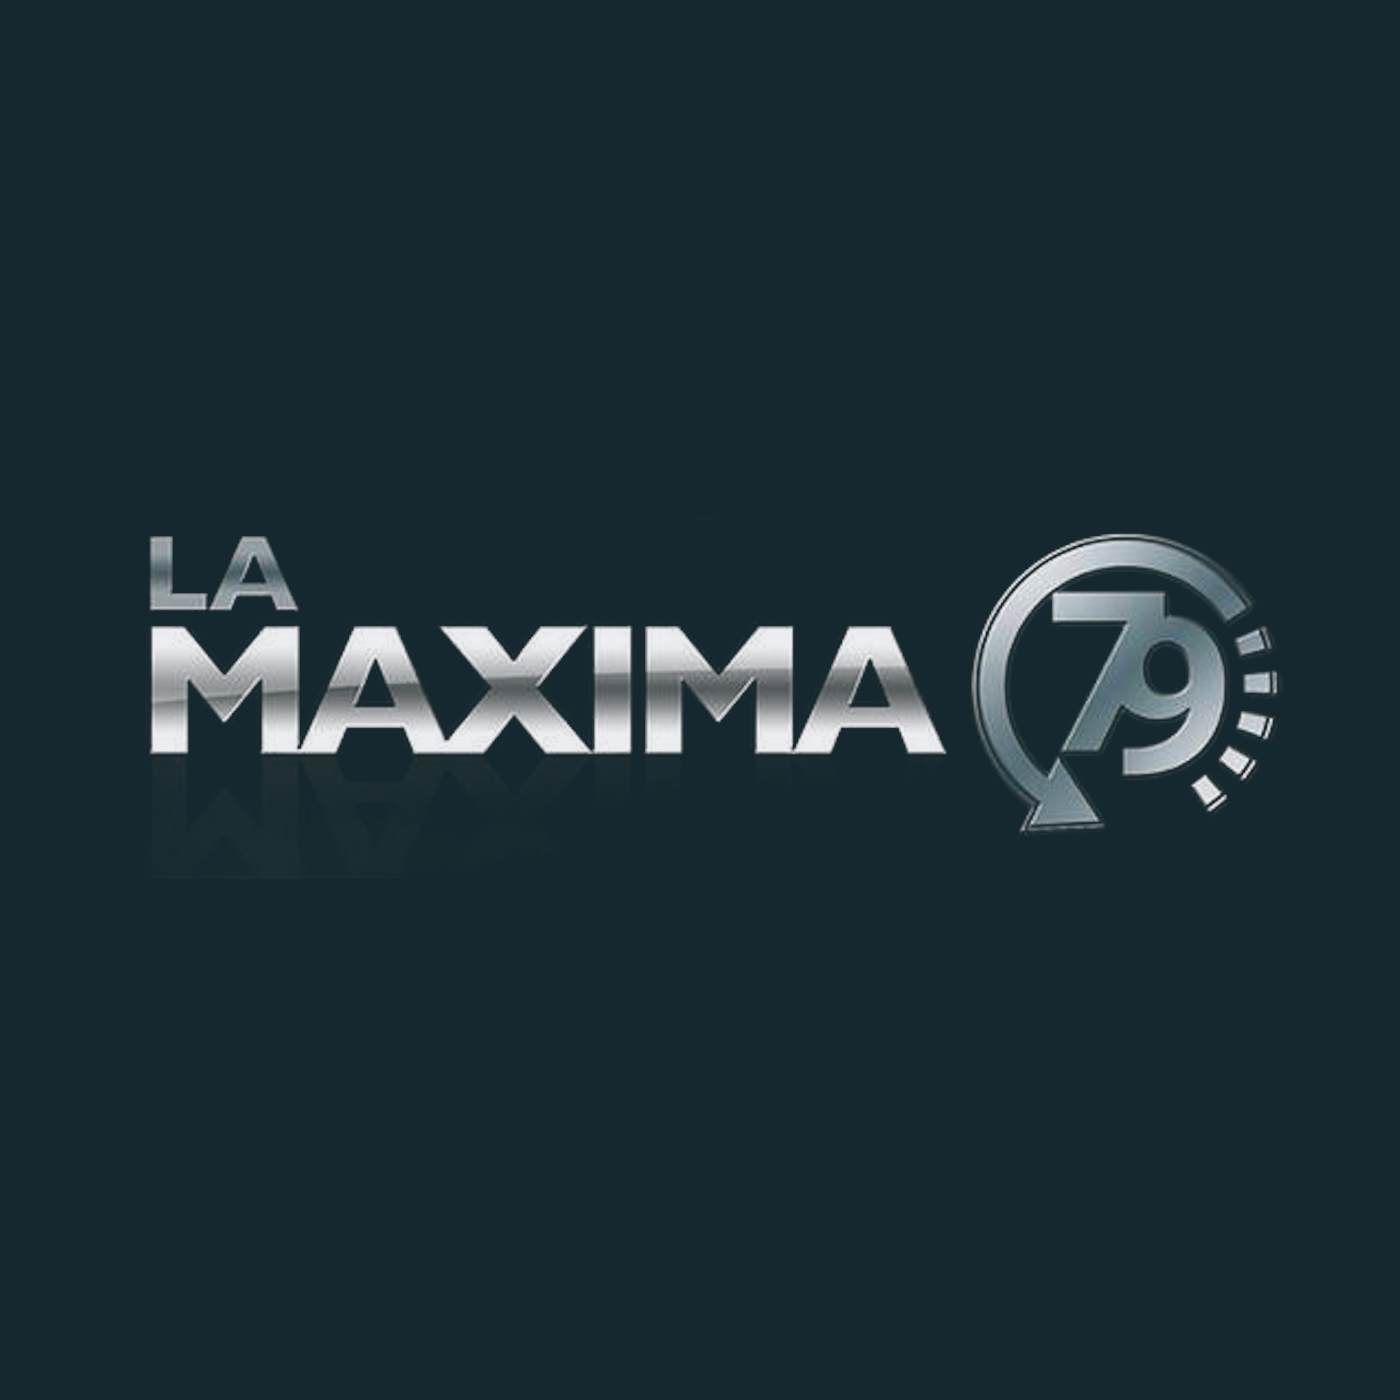 La Maxima 79